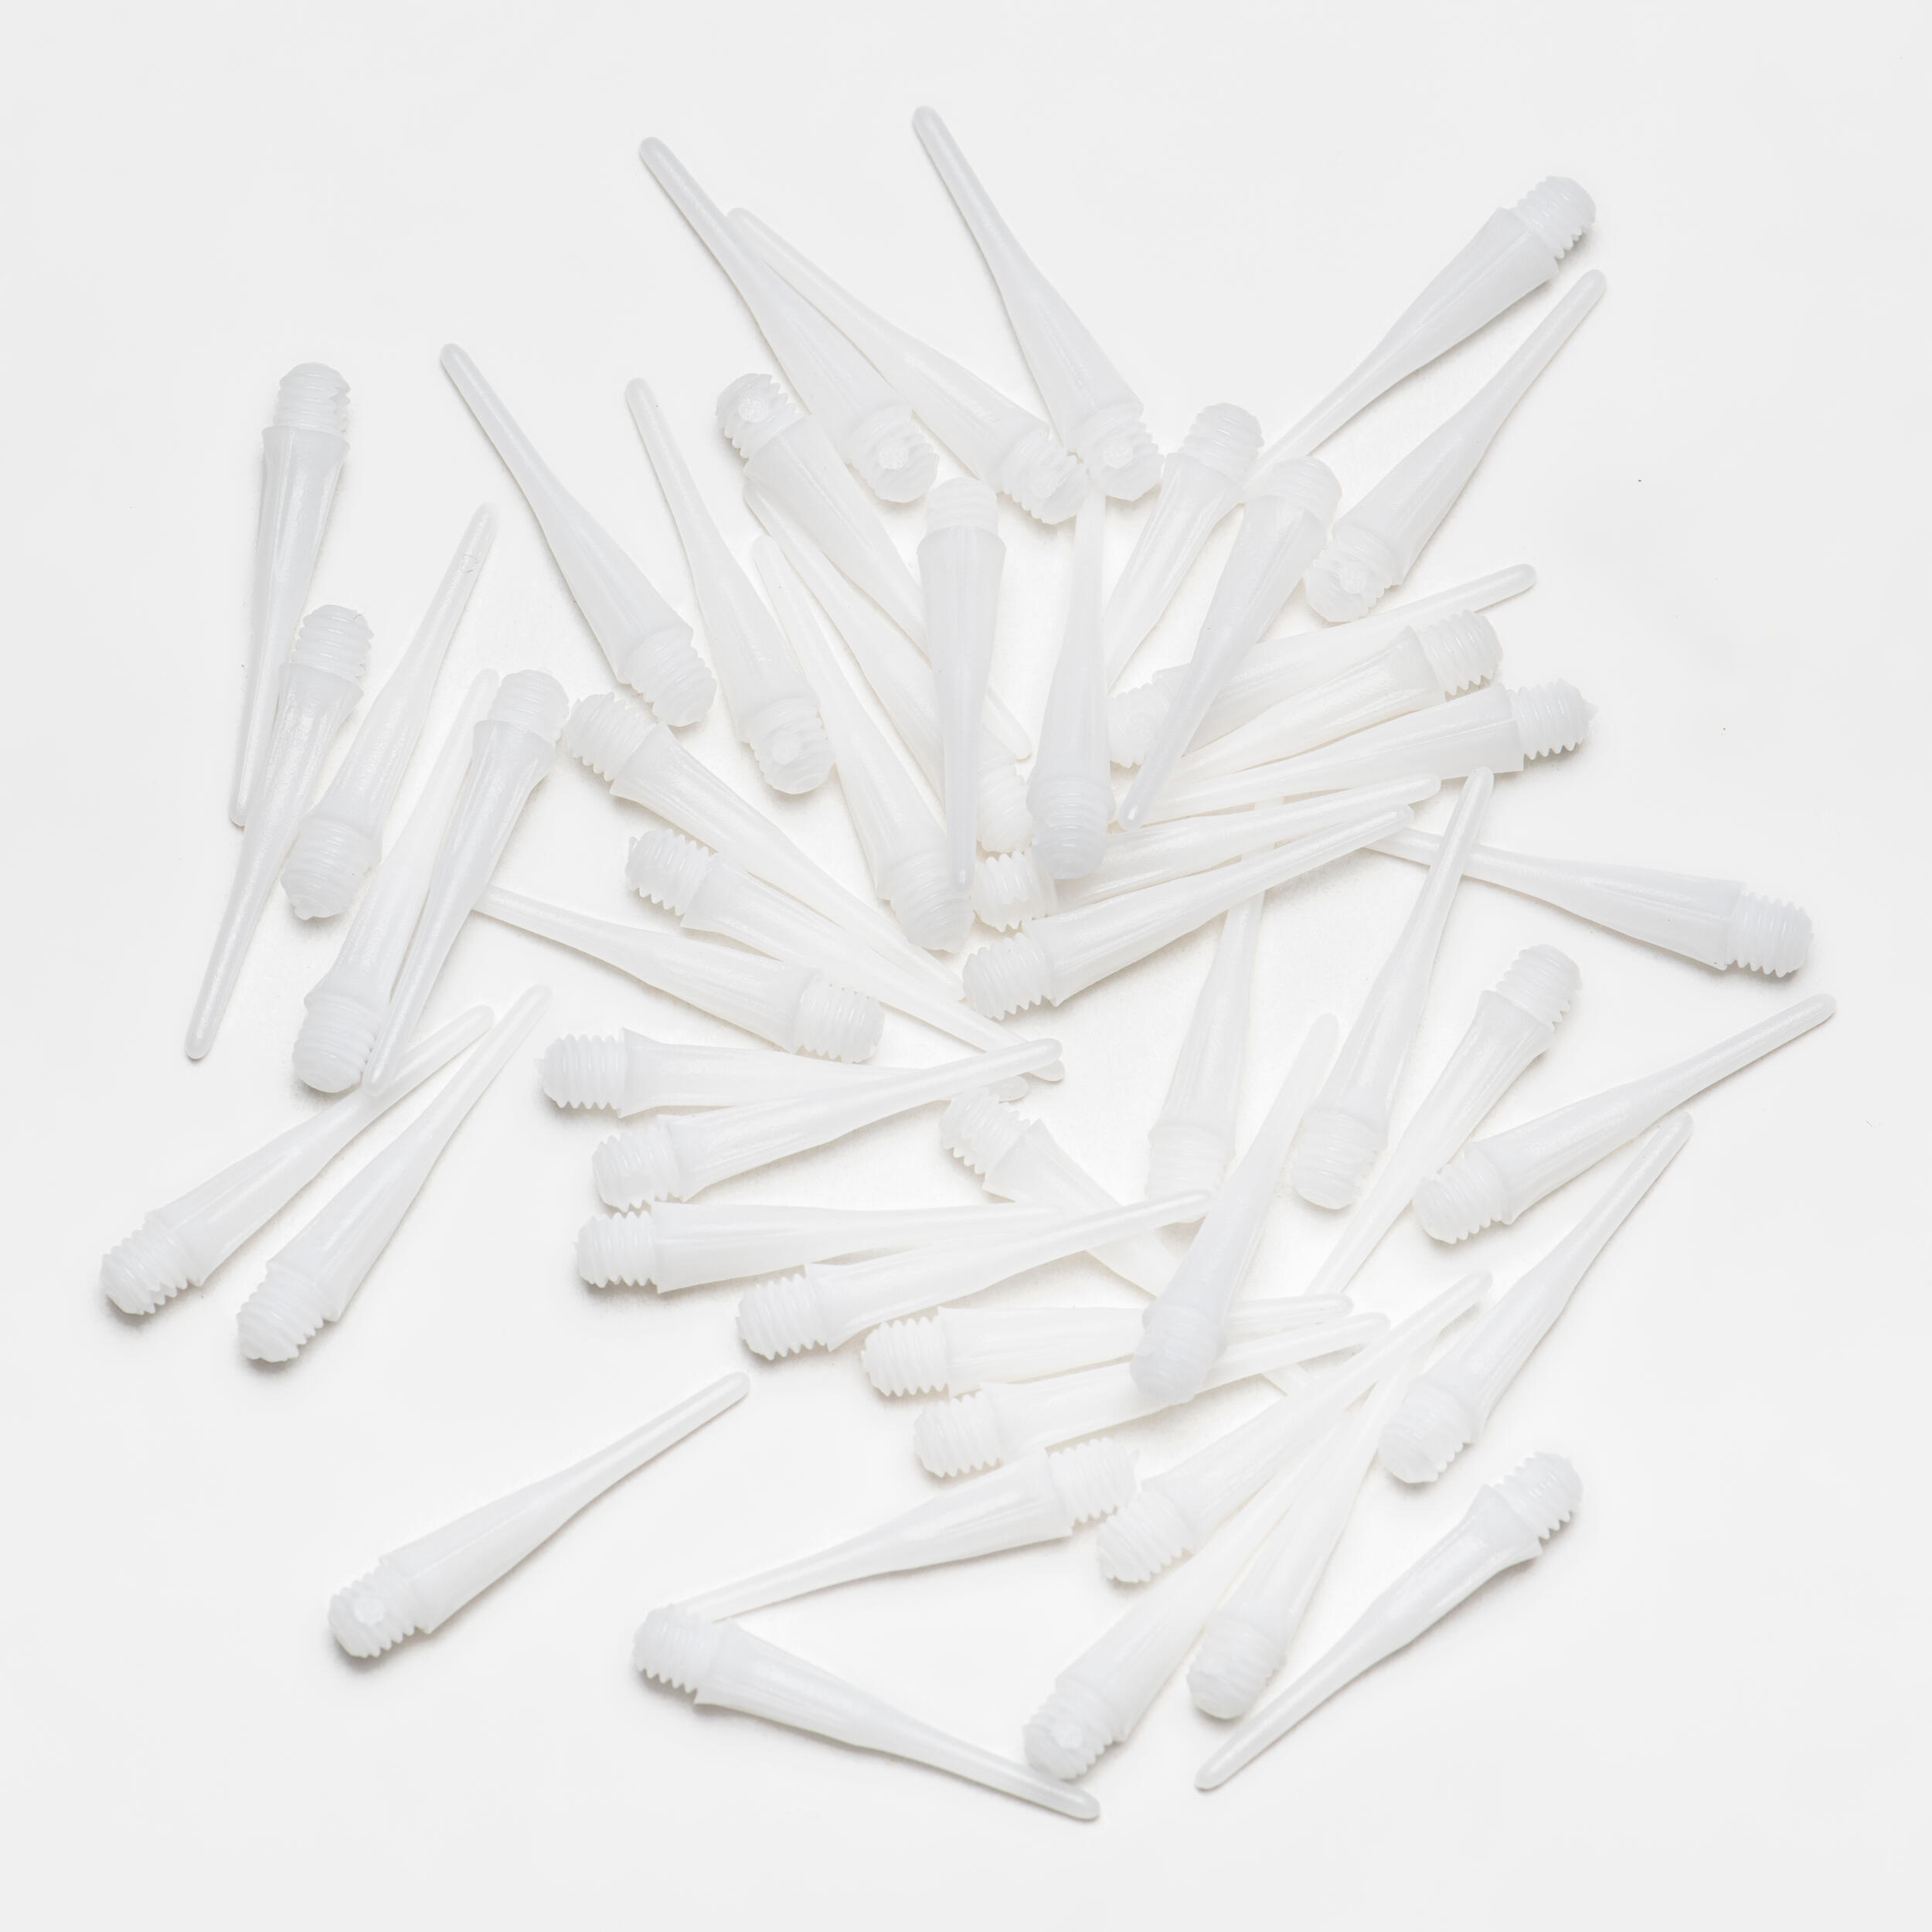 Vârfuri săgeți plastic Soft tip alb X50 Accesorii